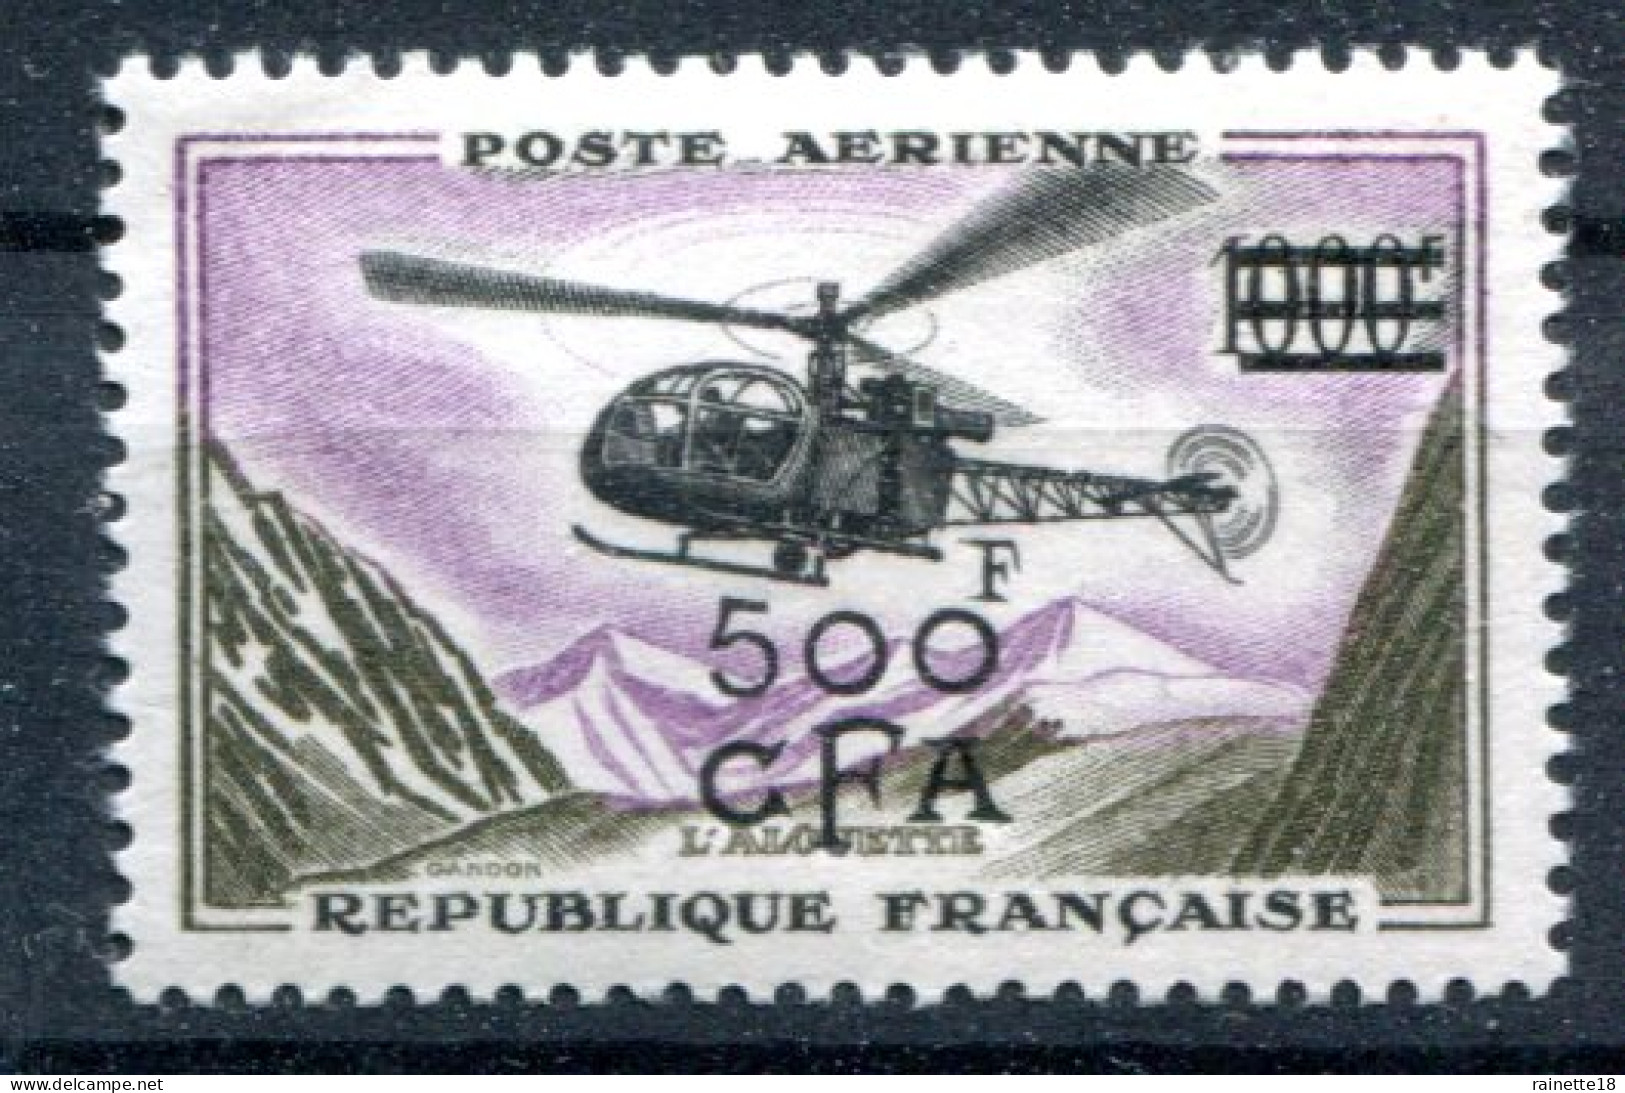 Réunion        CFA       PA  57 ** - Airmail